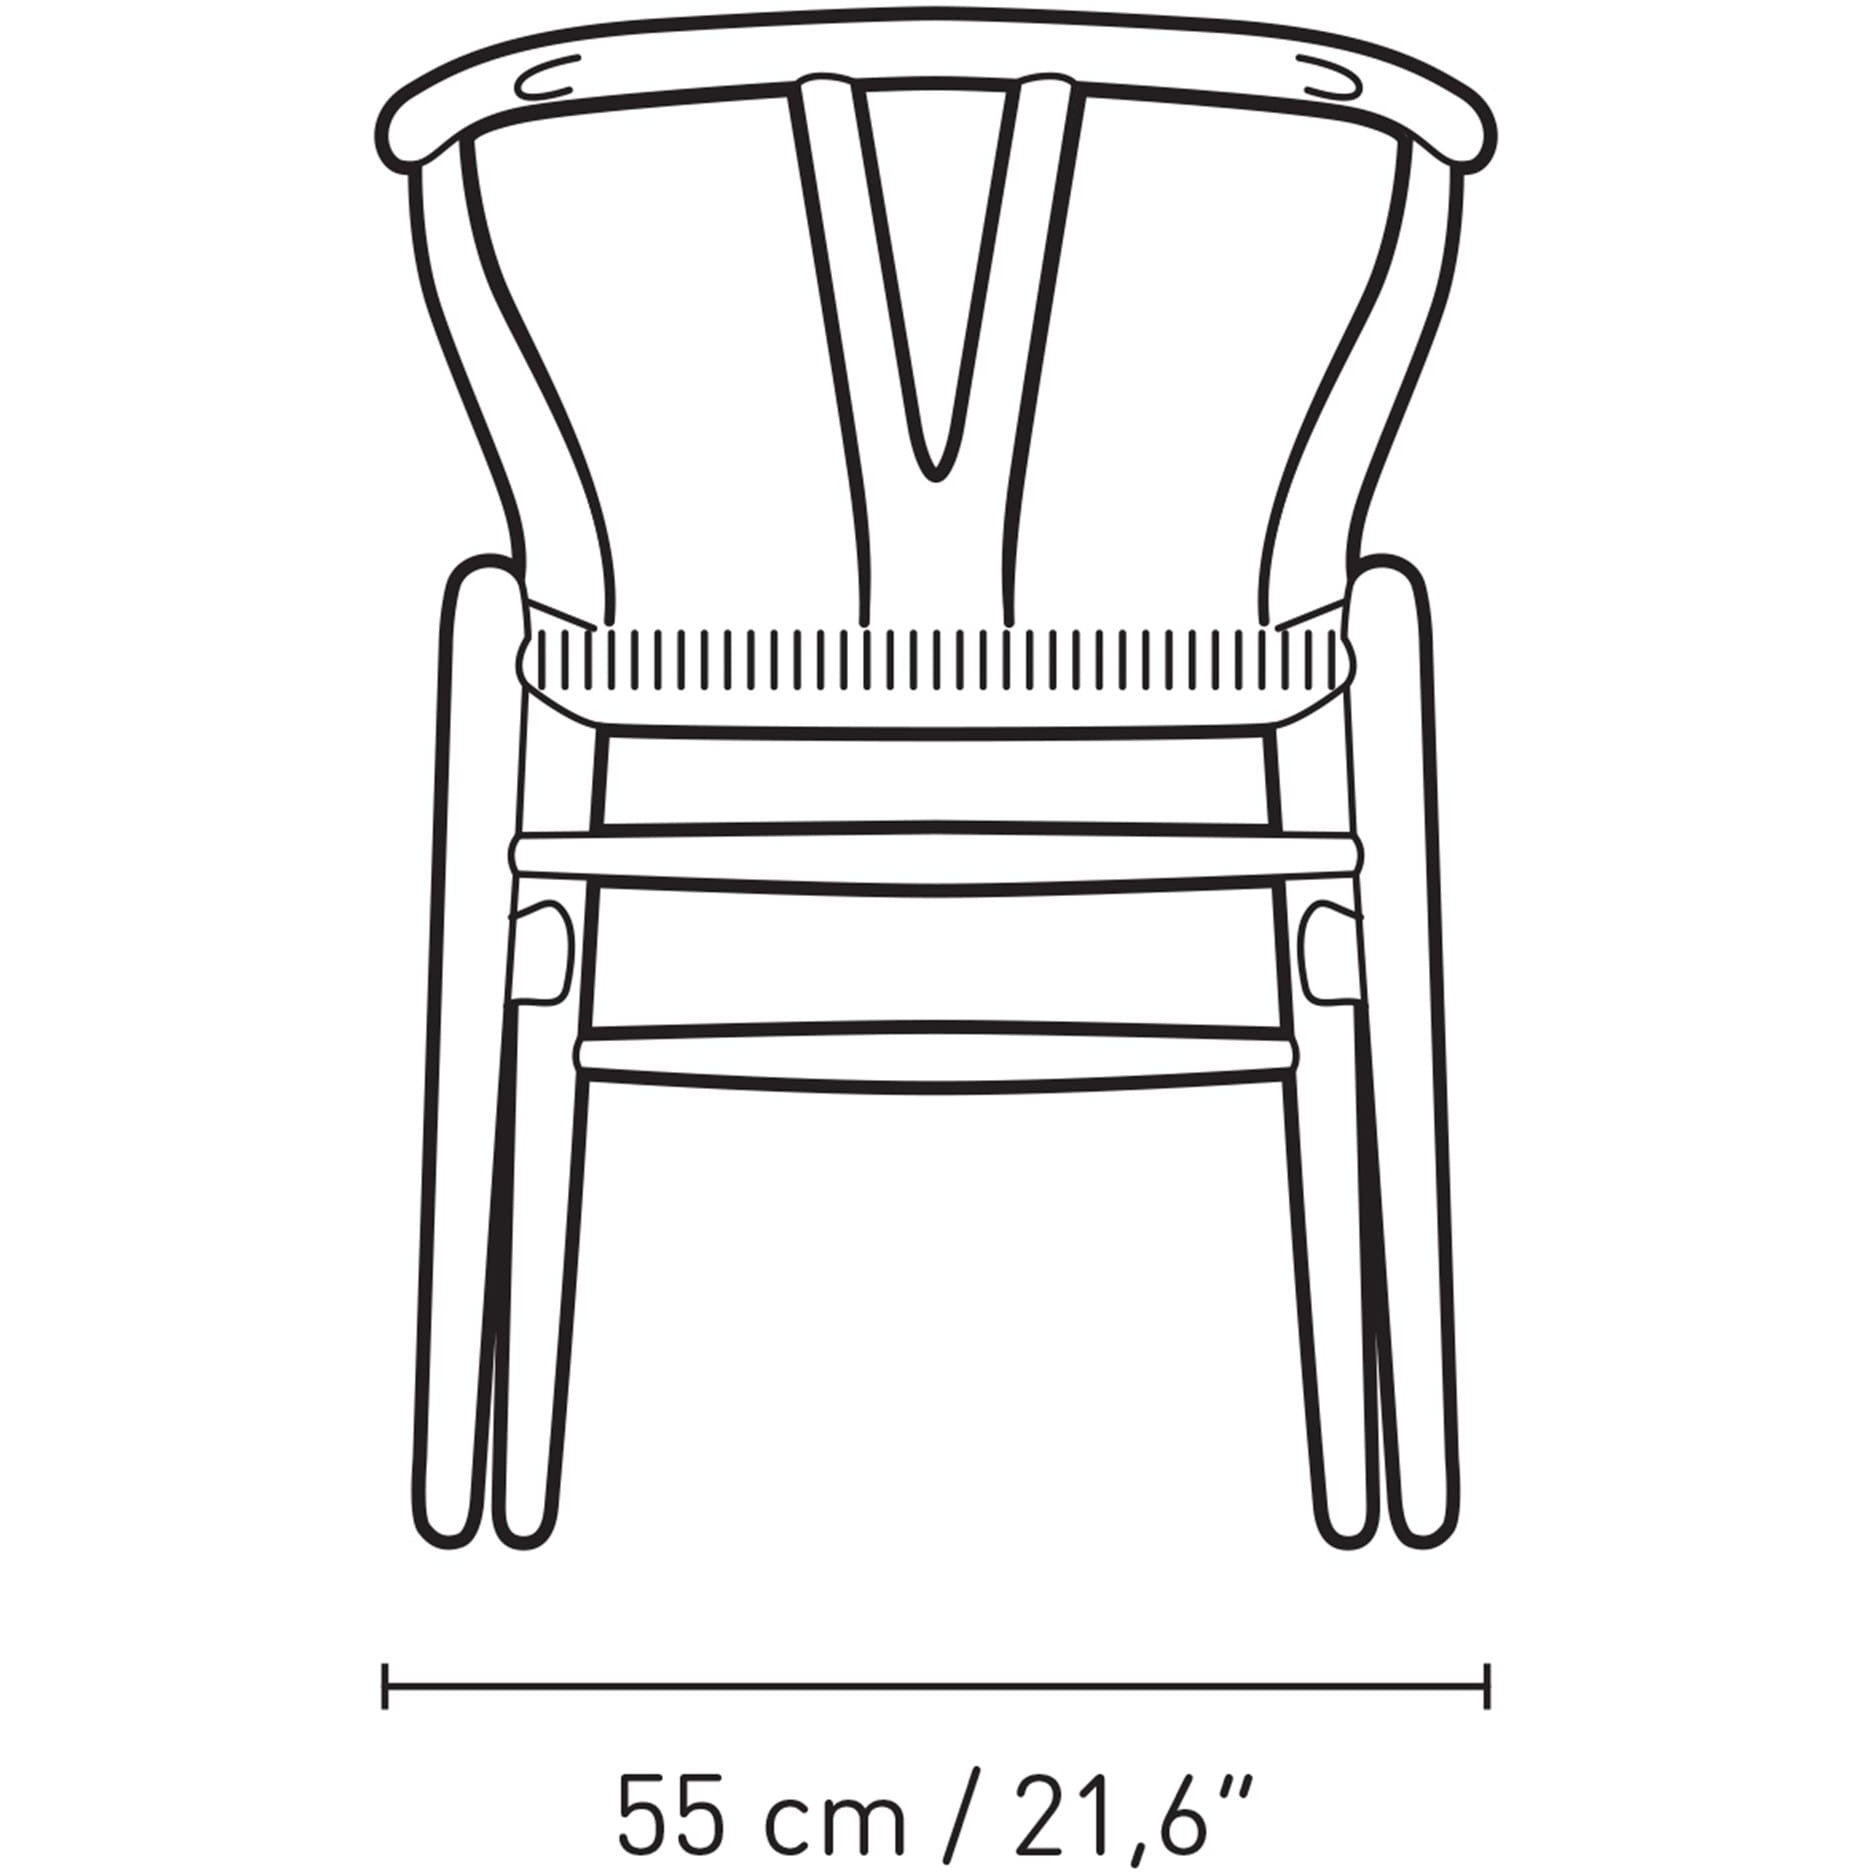 Carl Hansen Ch24 Wishbone Chair, Mahogany Oiled